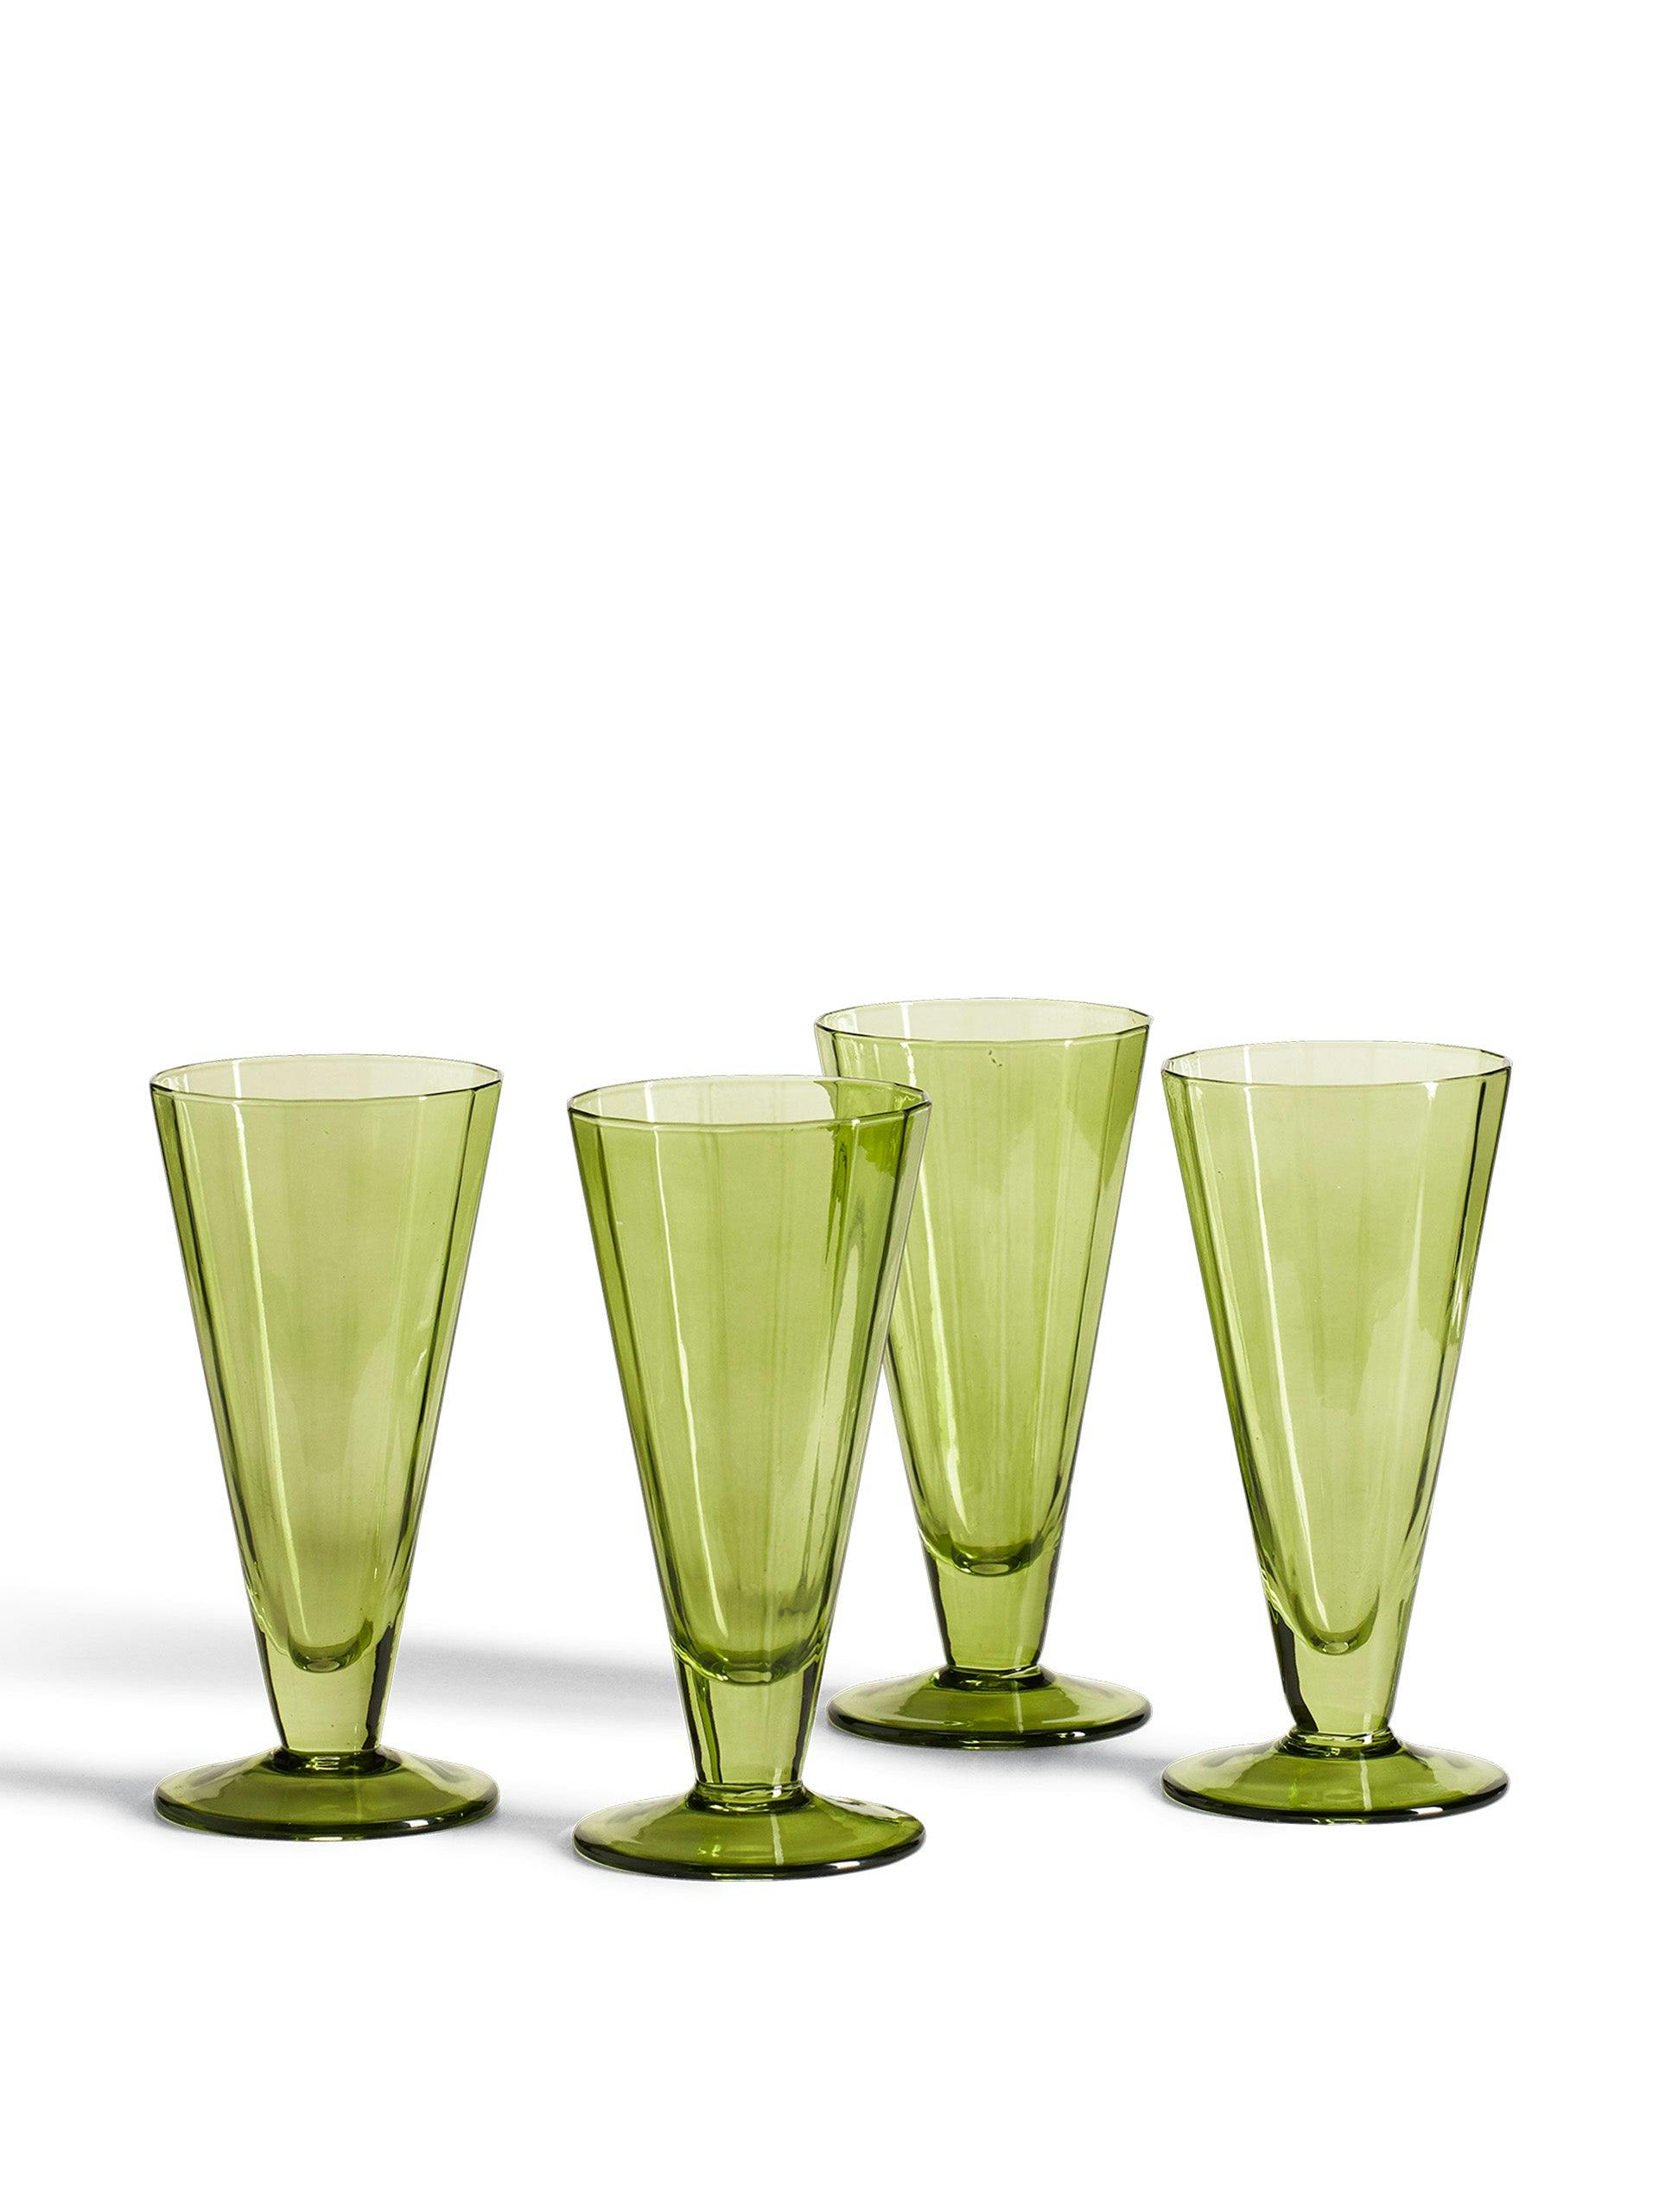 Green Fitzgerald champange flutes (set of 4)